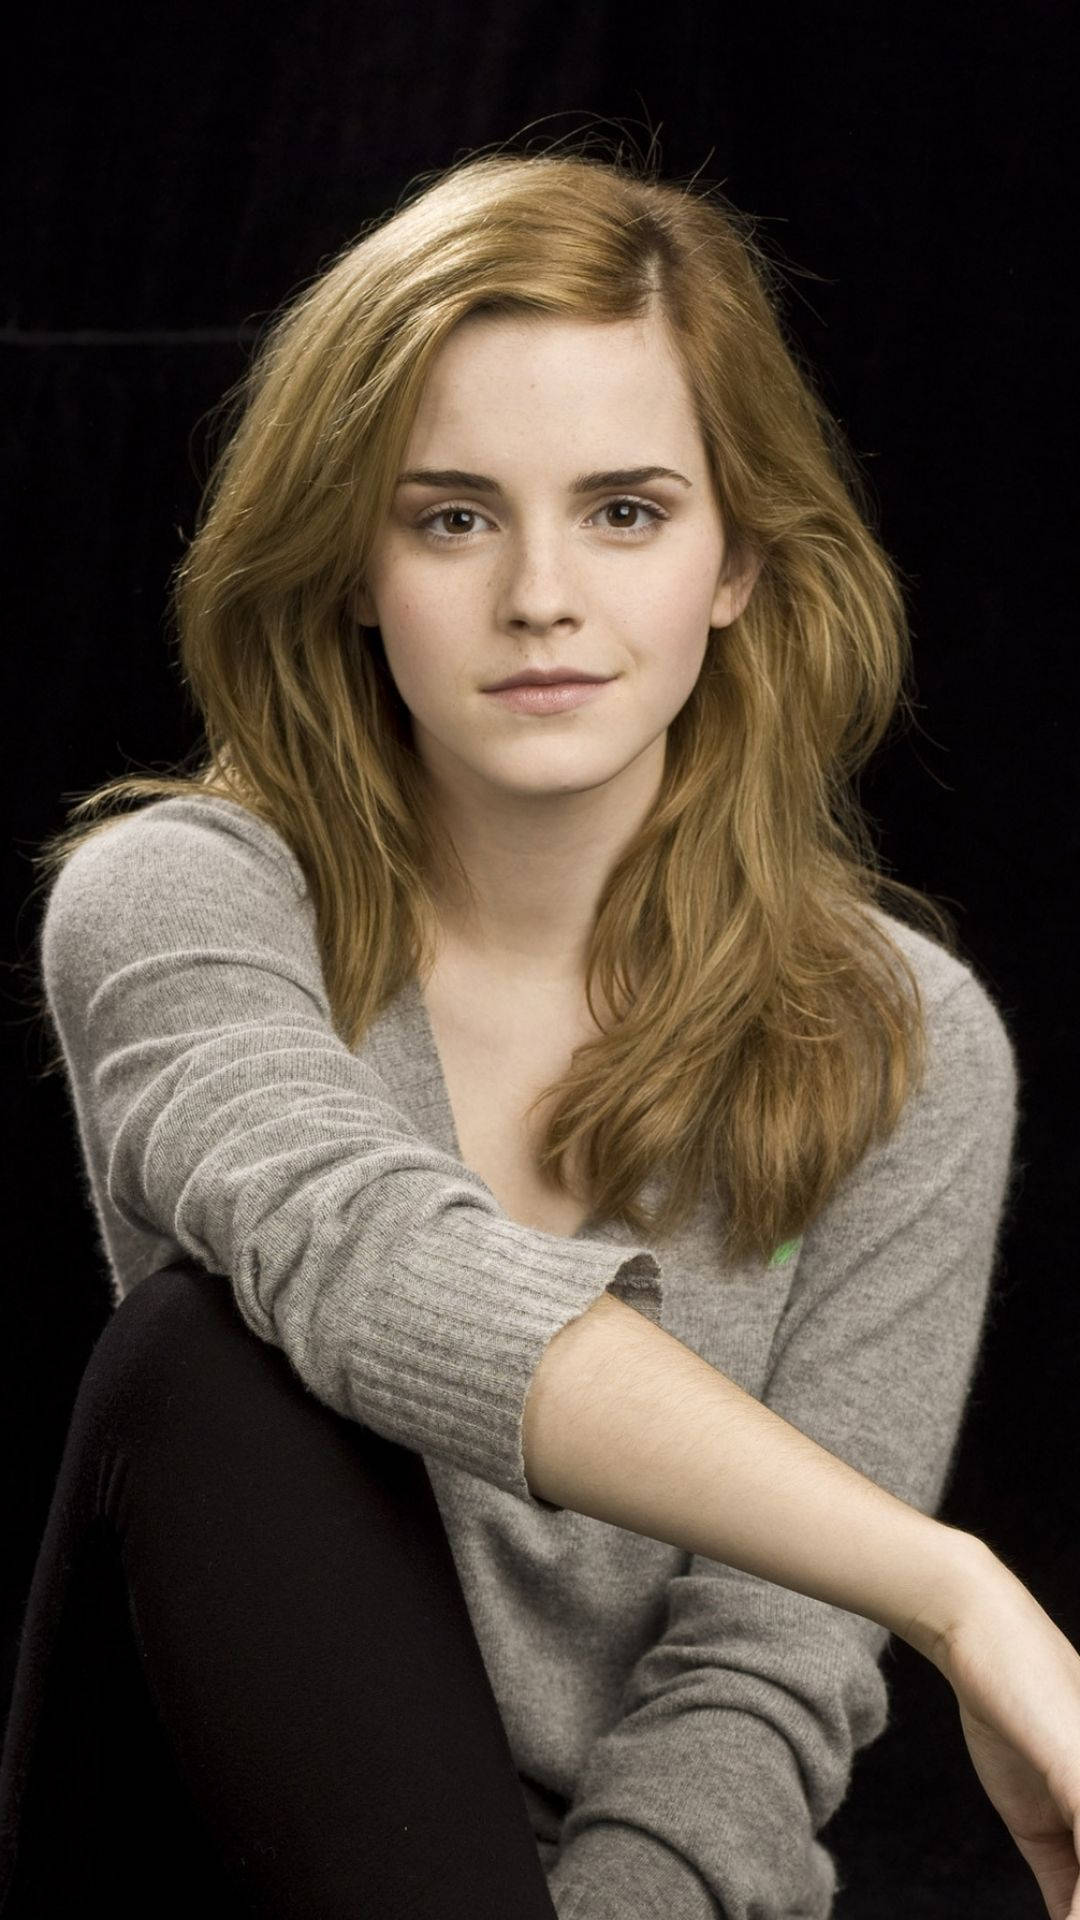 Casual Emma Watson Wallpaper